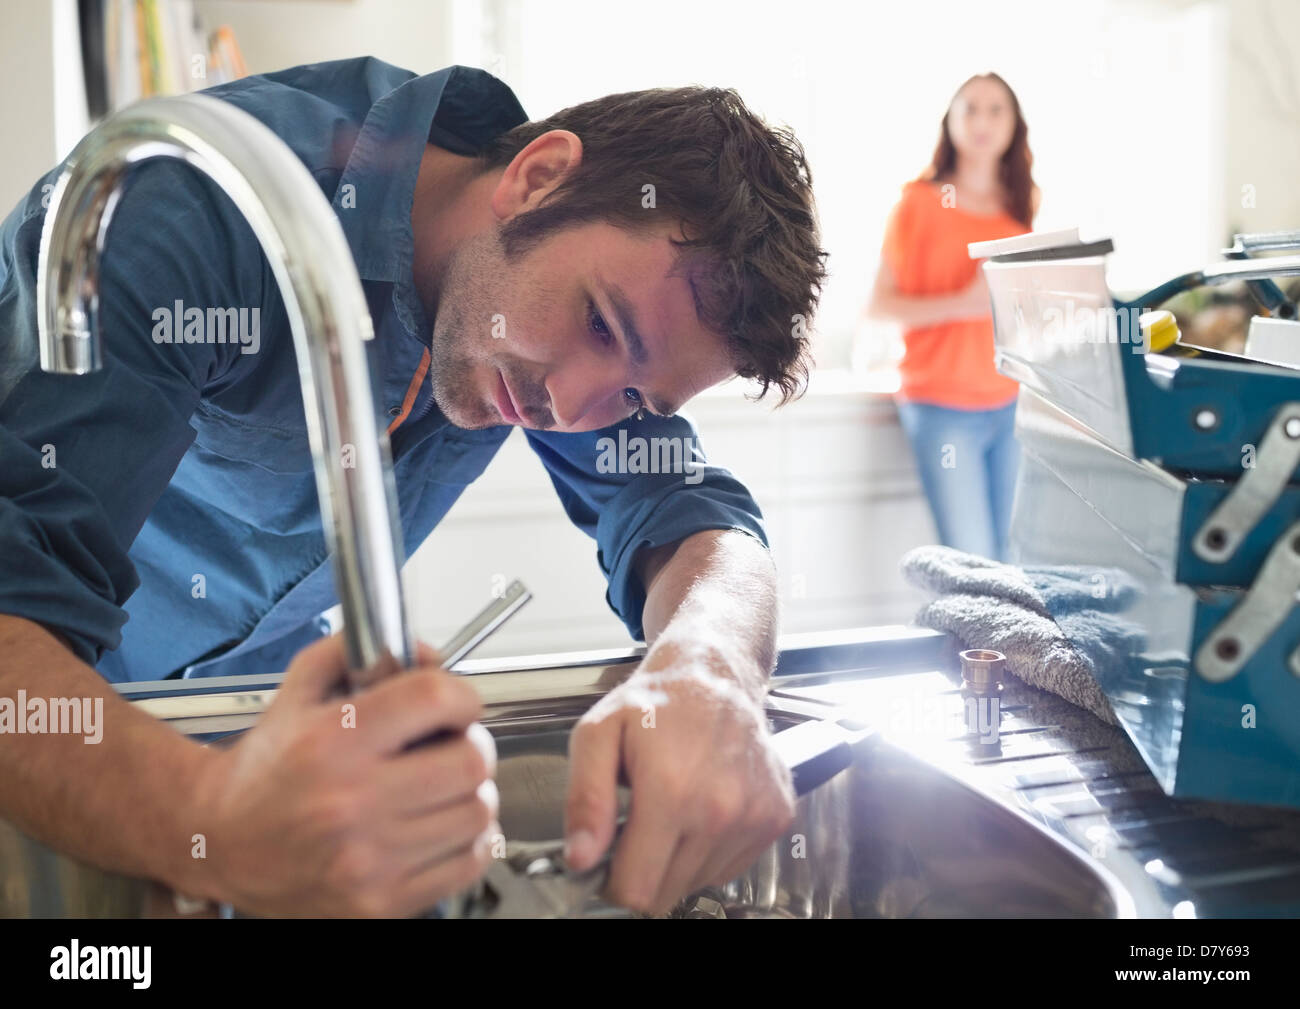 Plumber working on kitchen sink Stock Photo